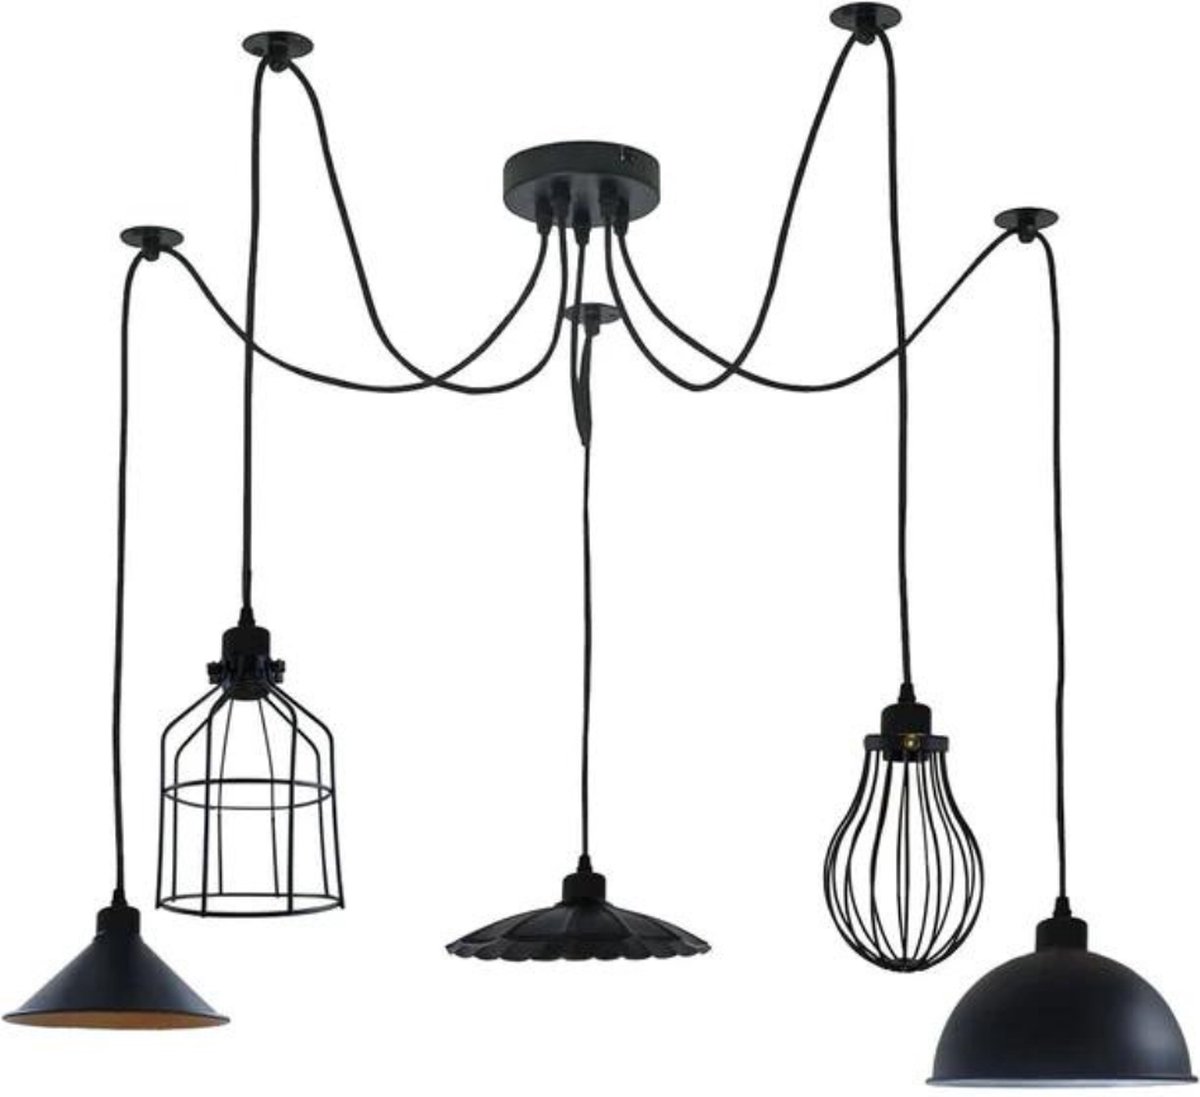 Clasterior Hanglamp Industrieel - Hanglampen Woonkamer - 5 lichts - E27 - Zwart